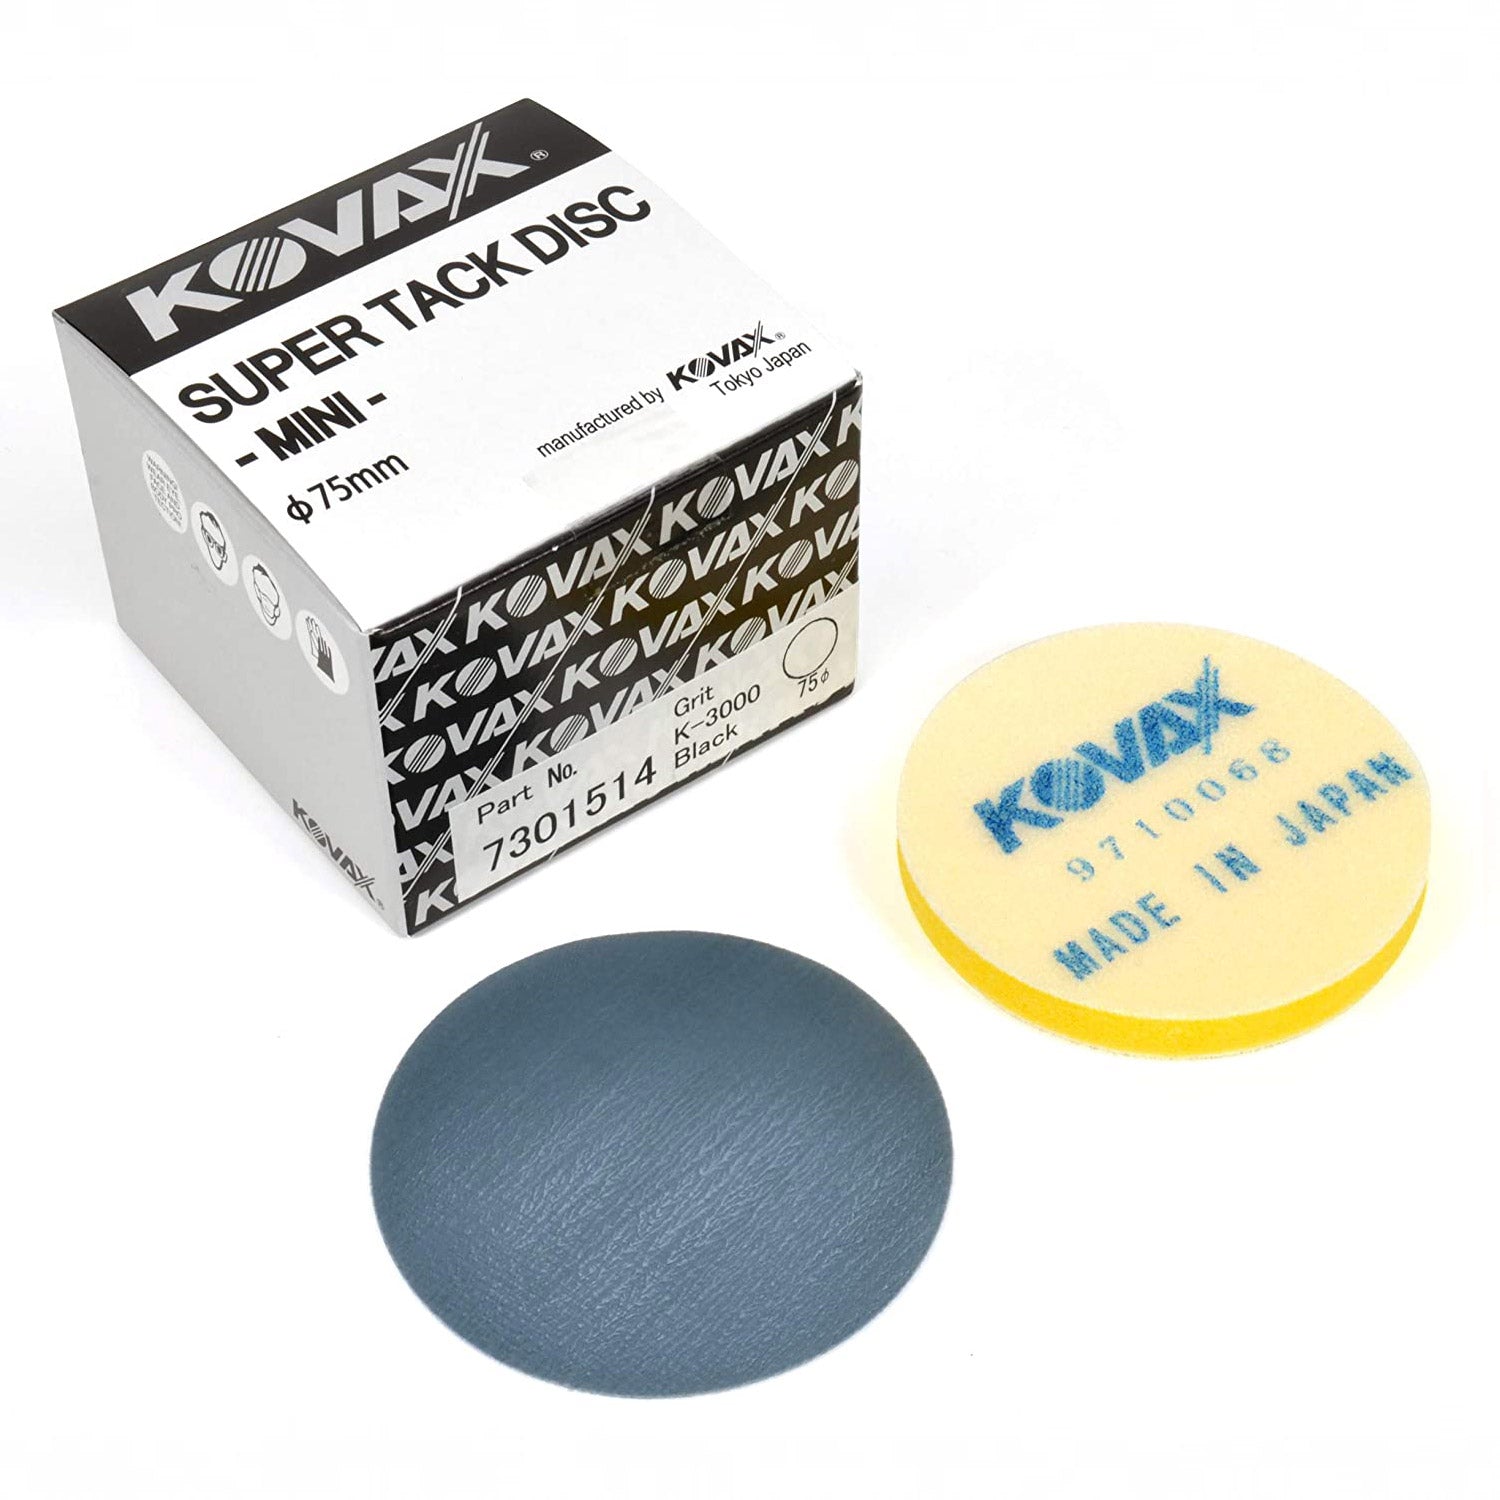 Super Buflex Flexible Dry 3 inch Mini-Sanding Discs, Blue K-2500, Hook & Loop, 730-1515, 50 Discs + Interface Pad